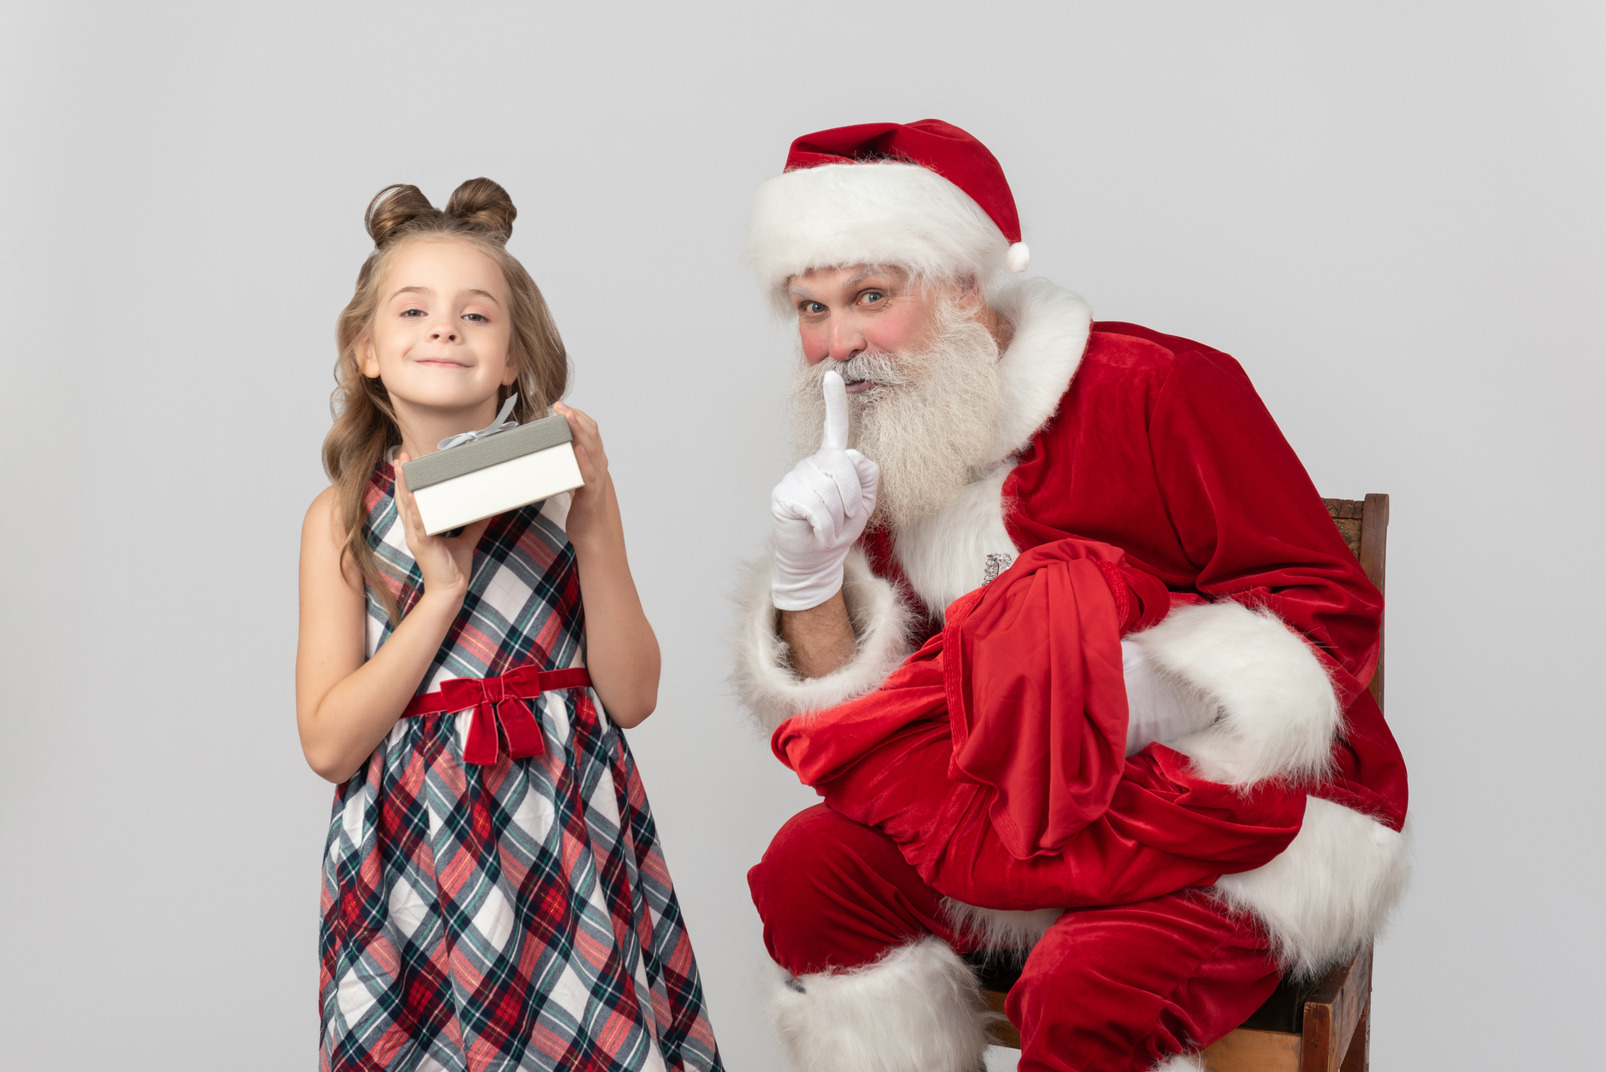 Keeping santa's secret about presents